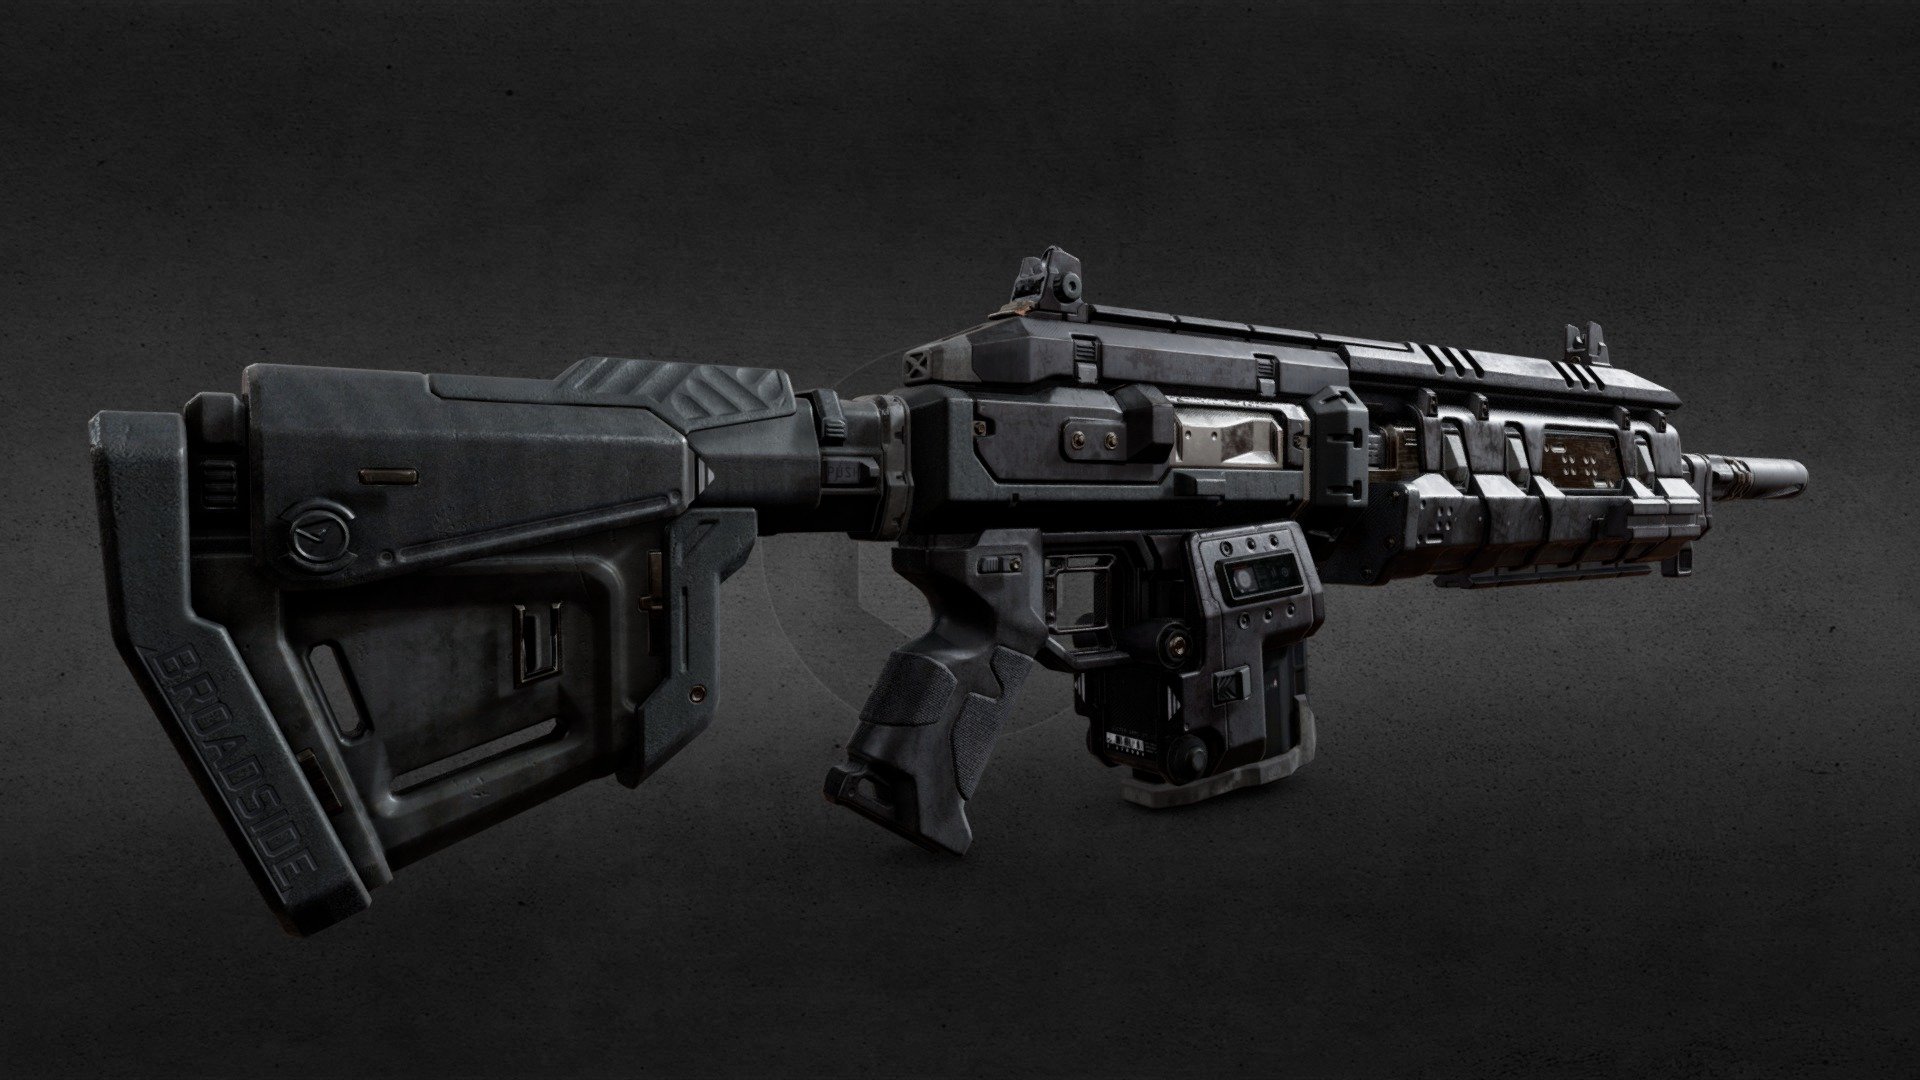 The Man-O-War is an assault rifle featured in Call of Duty: Black Ops III.

The &ldquo;Man-O-War